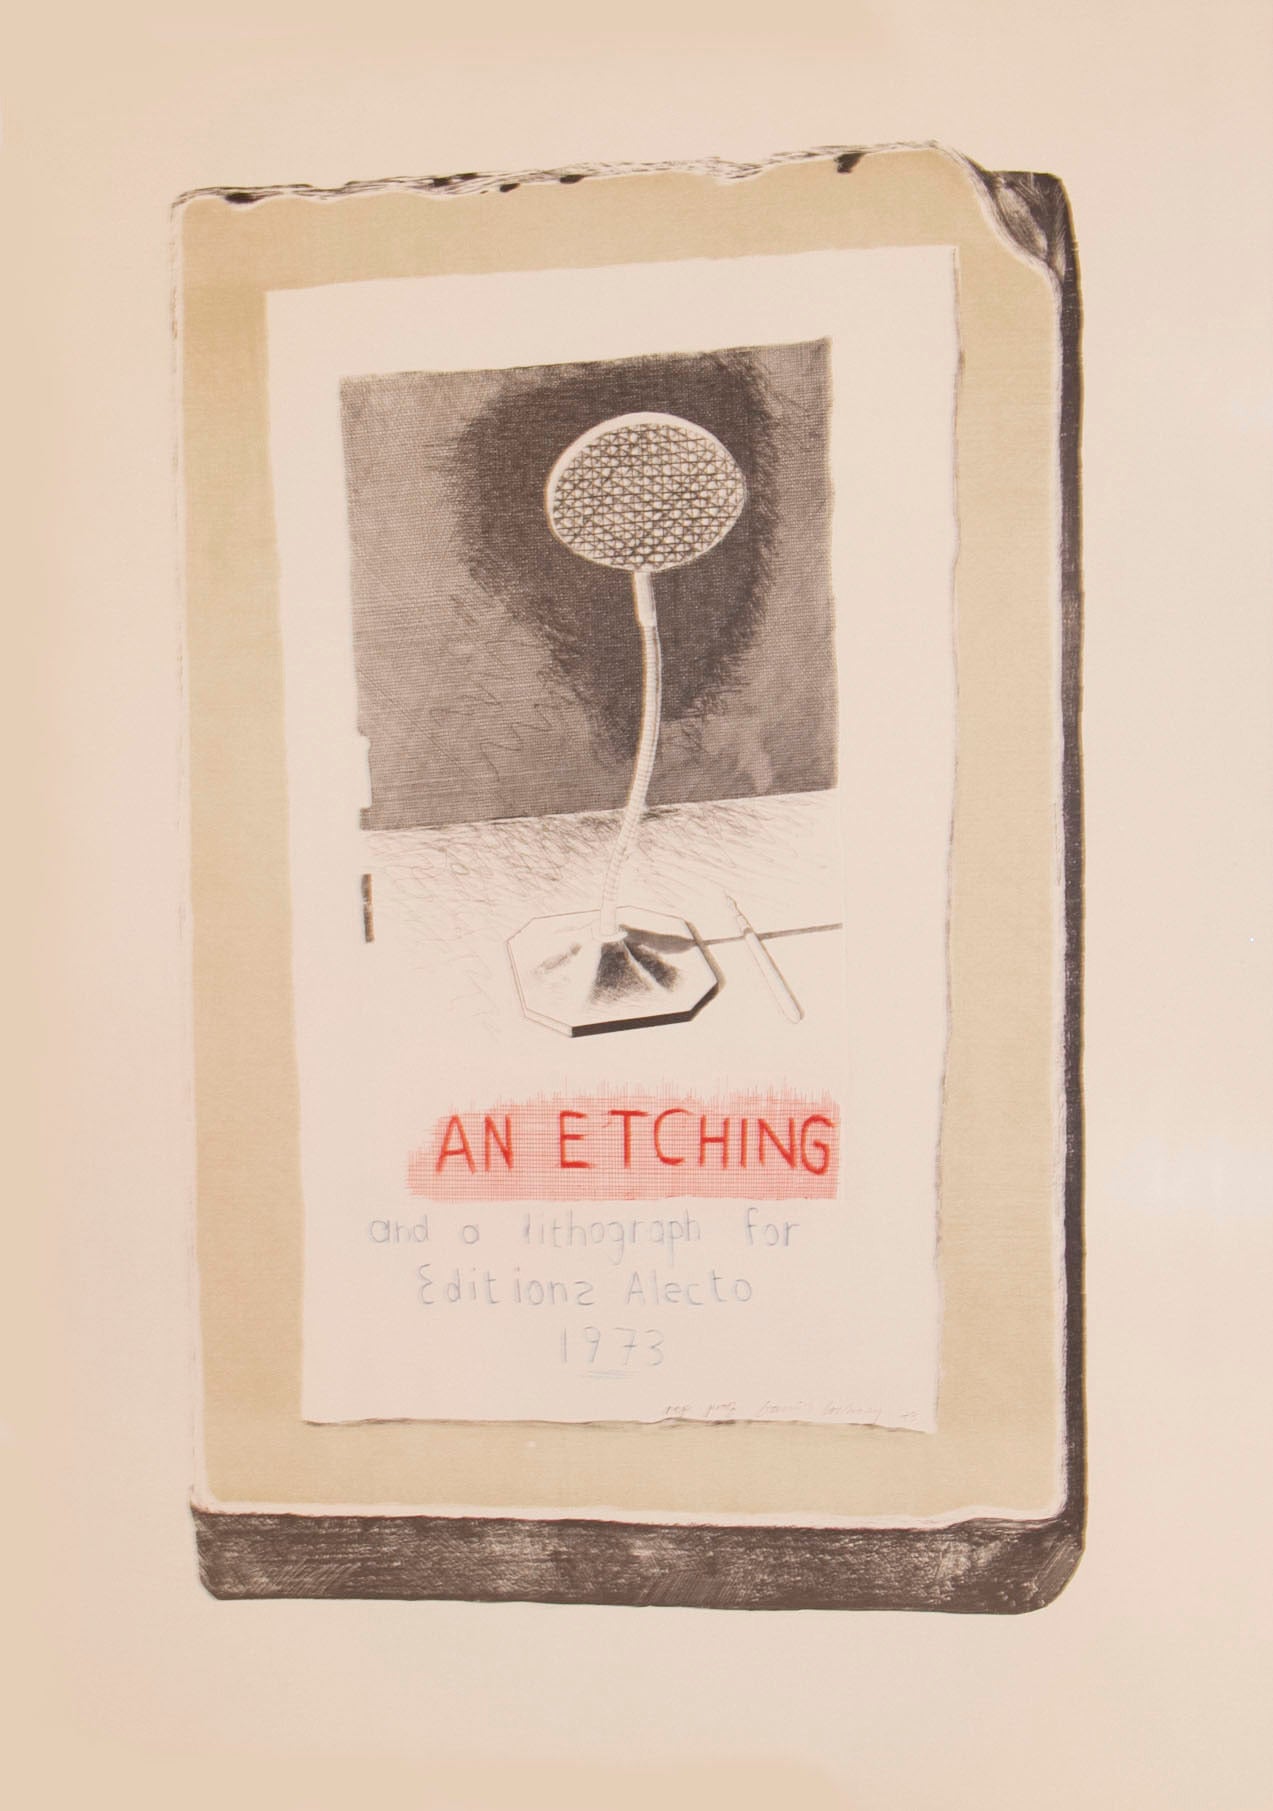 An Etching - Print by David Hockney